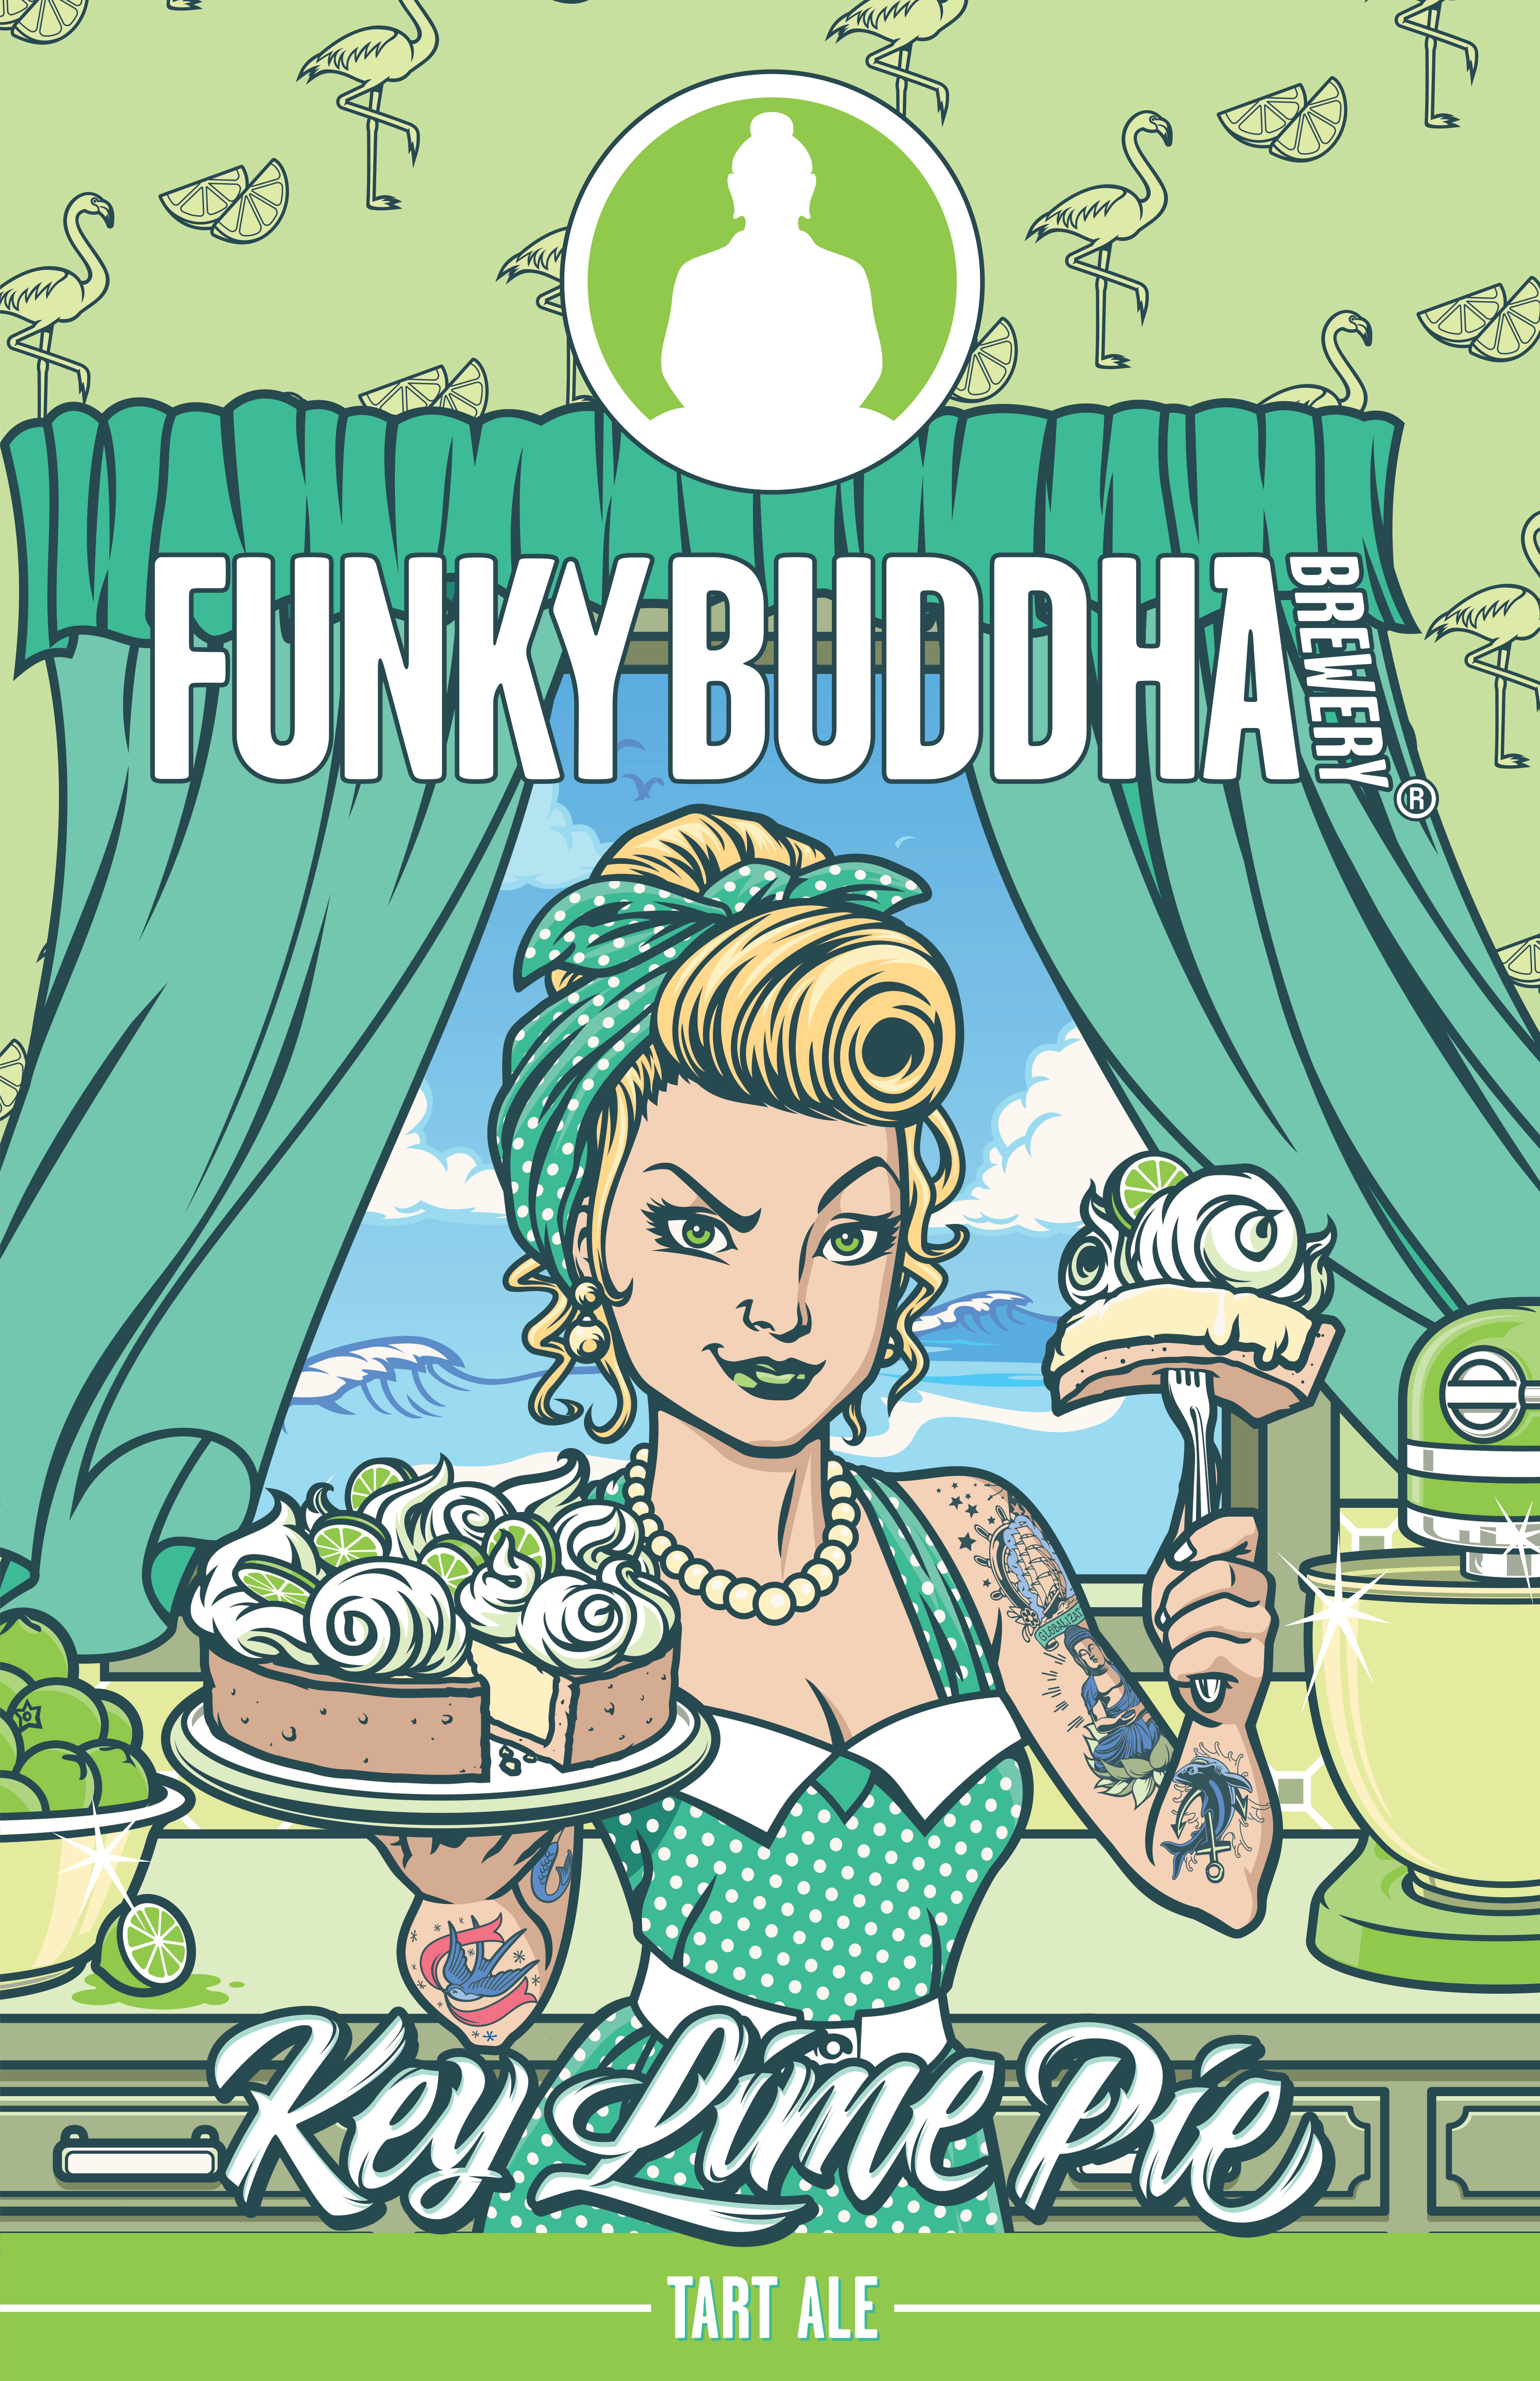 Funky Buddha Brewery Key Lime Pie Ale